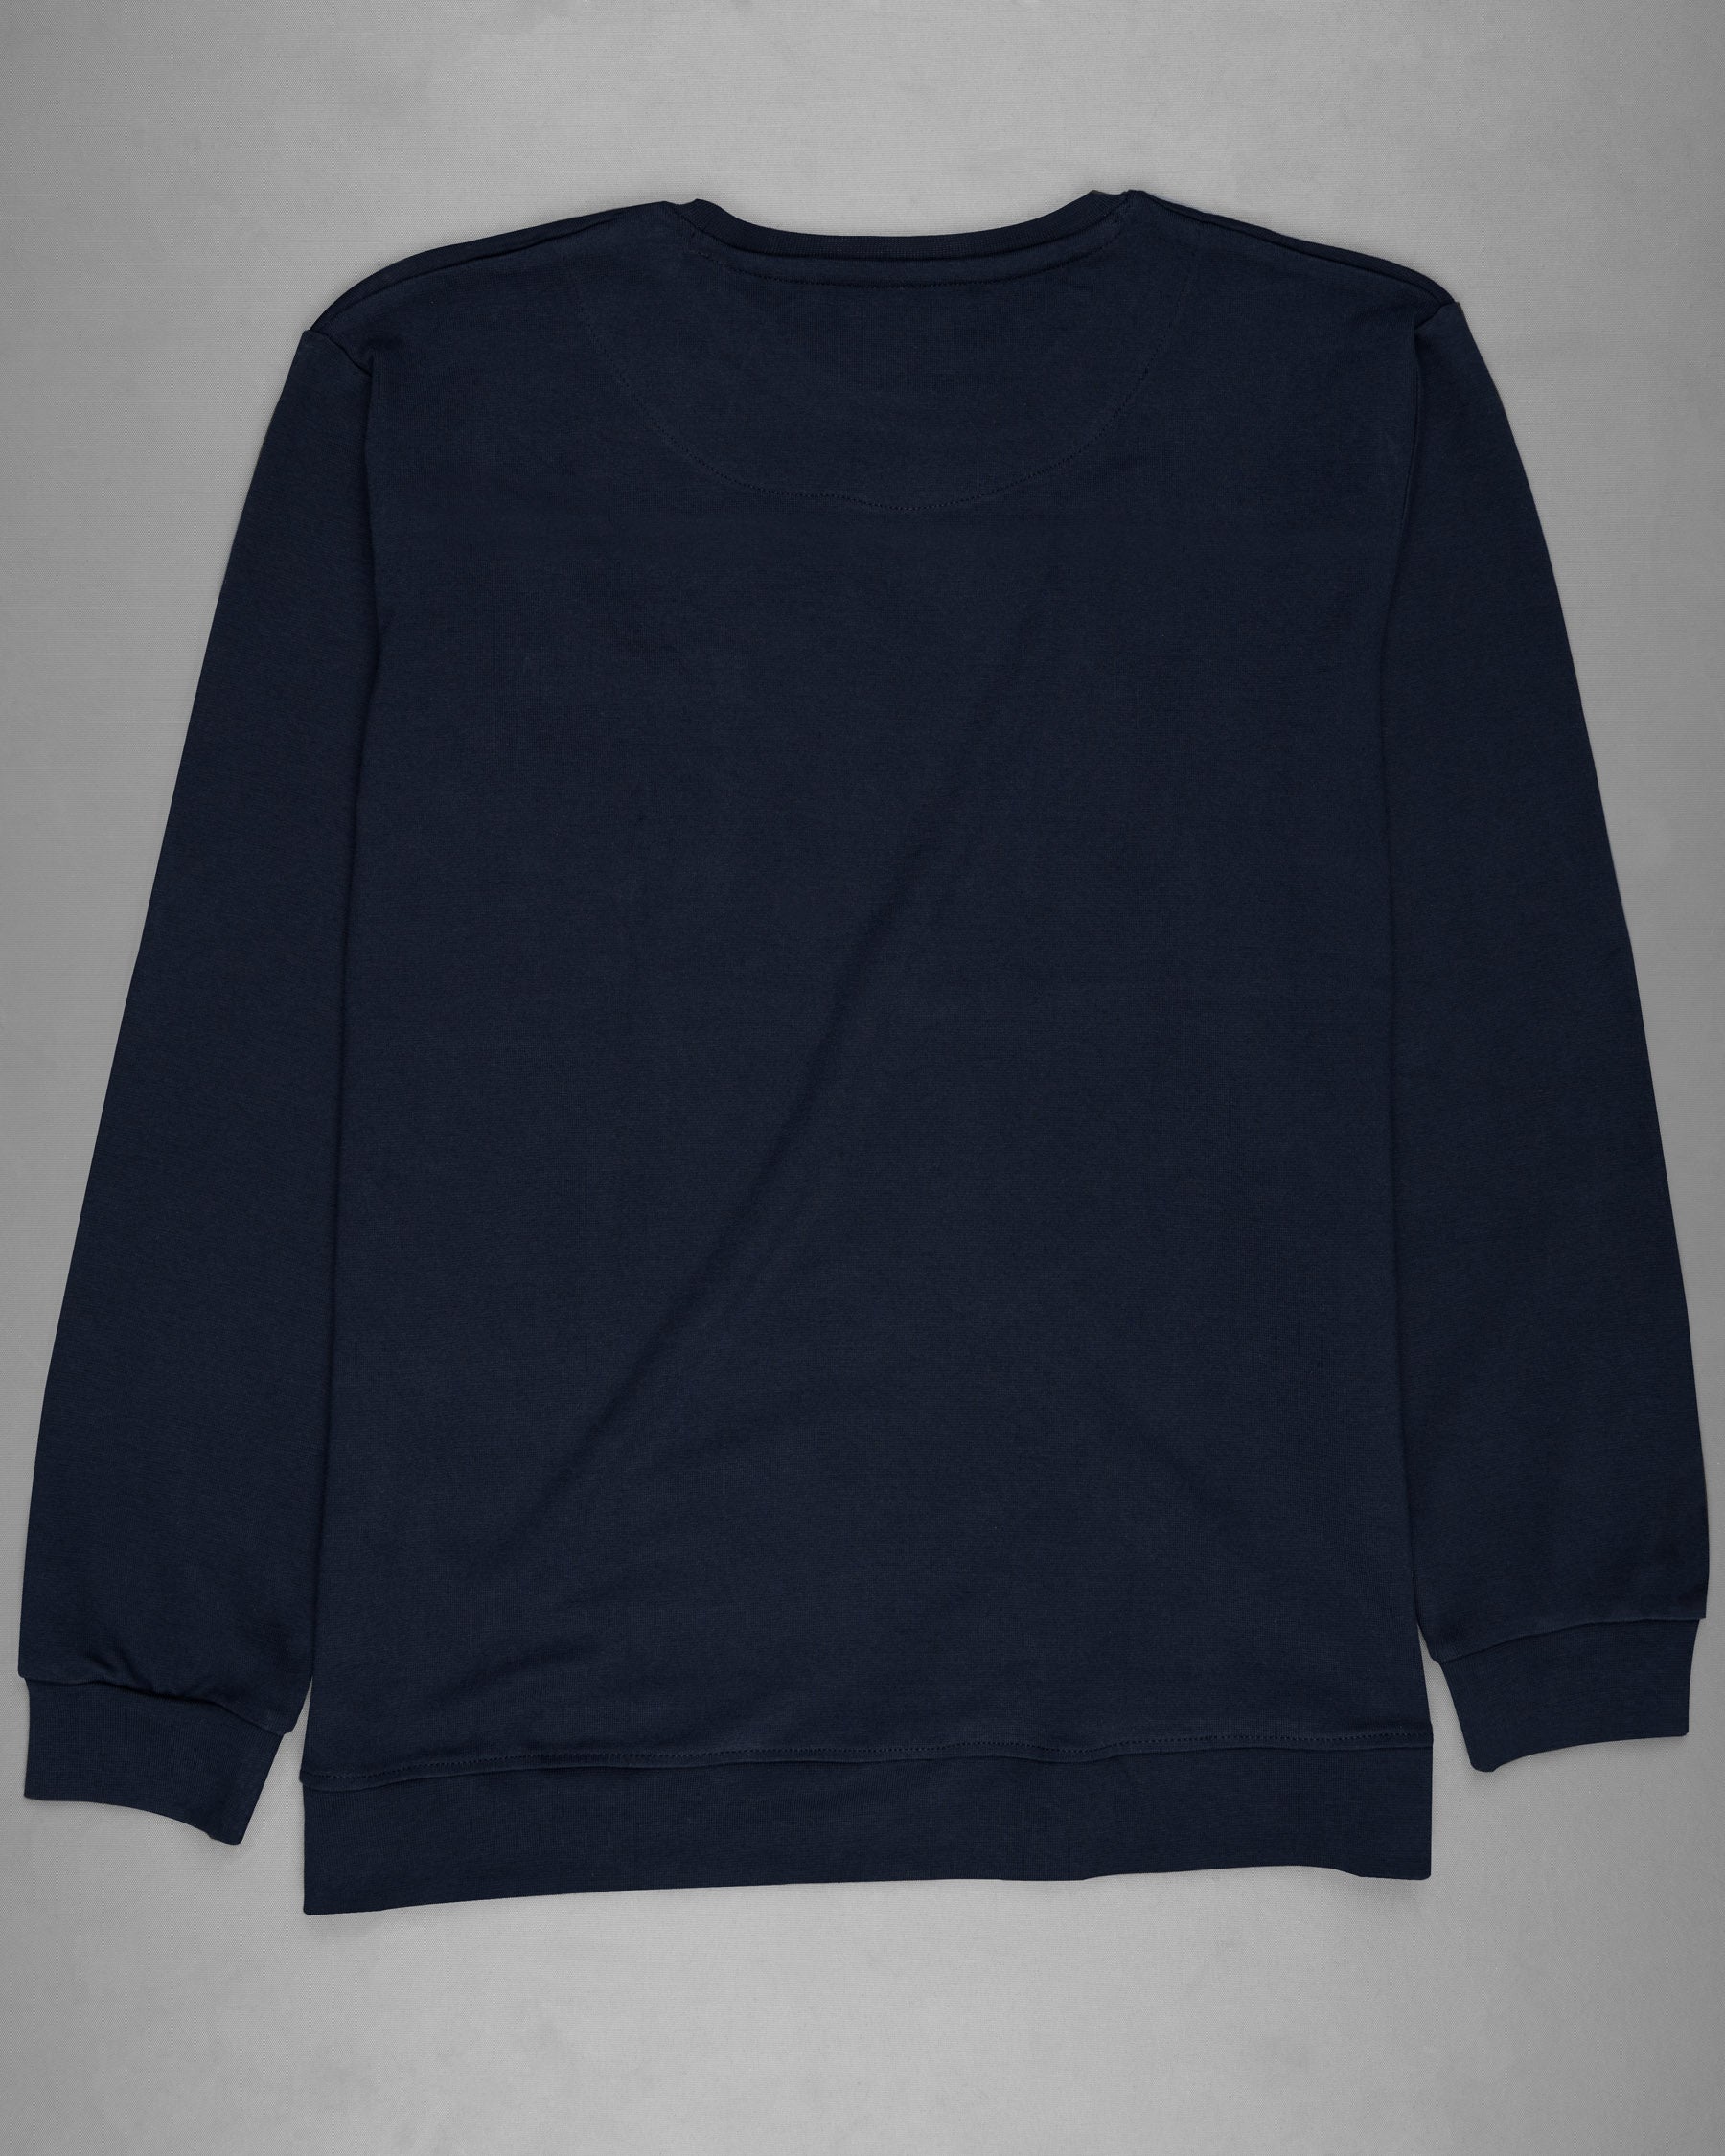 Givry with Mirage Blue Full Sleeve Premium Cotton Jersey Sweatshirt TS502-S, TS502-M, TS502-L, TS502-XL, TS502-XXL